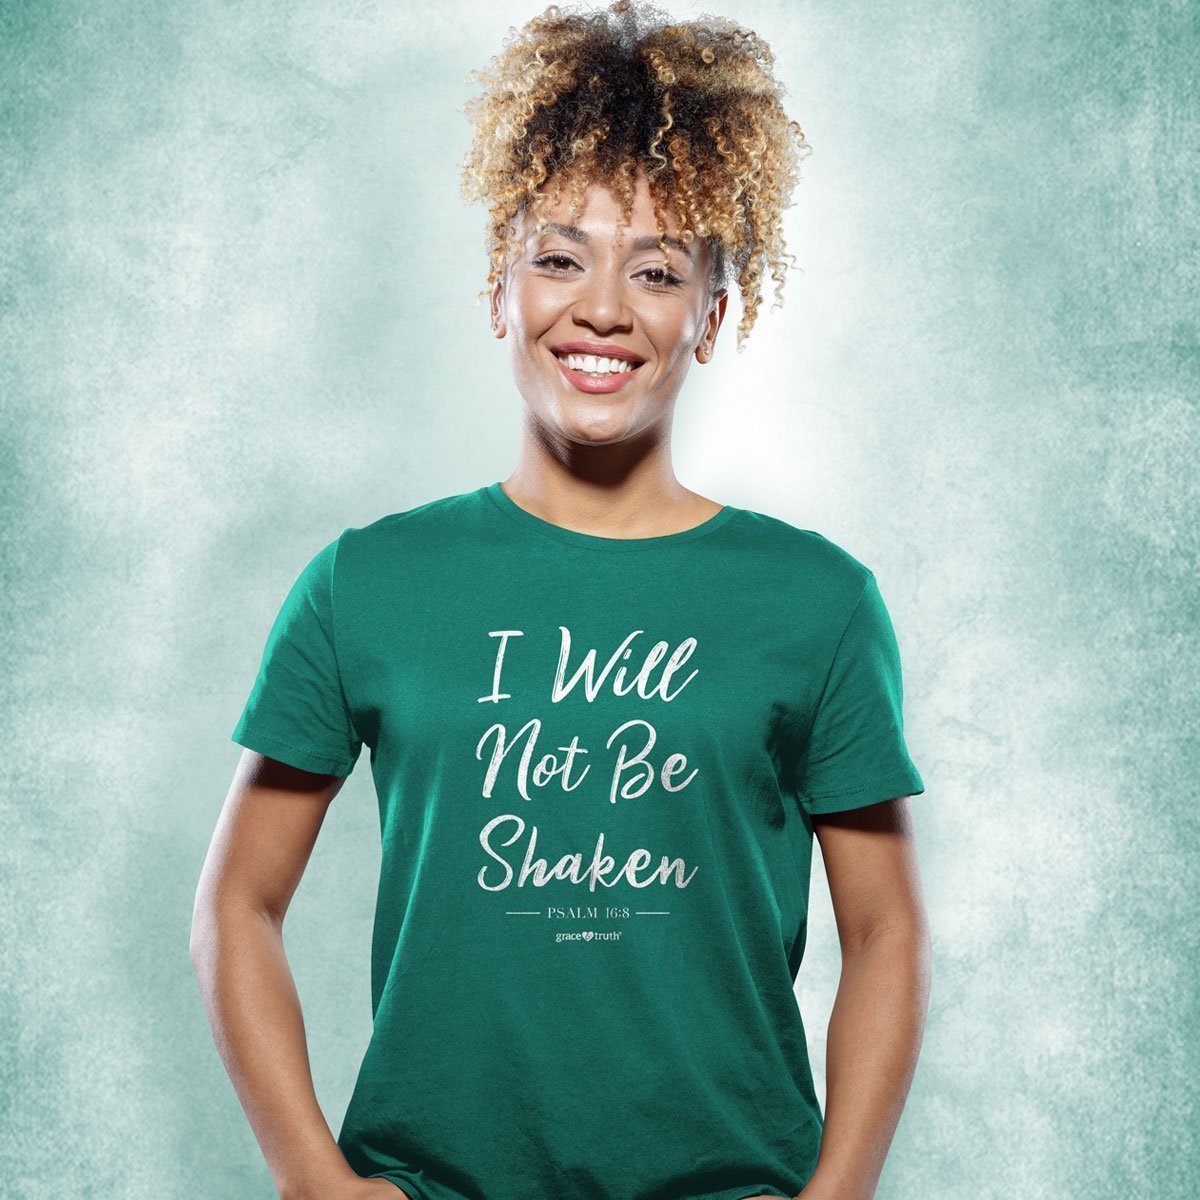 Shaken - T-shirt